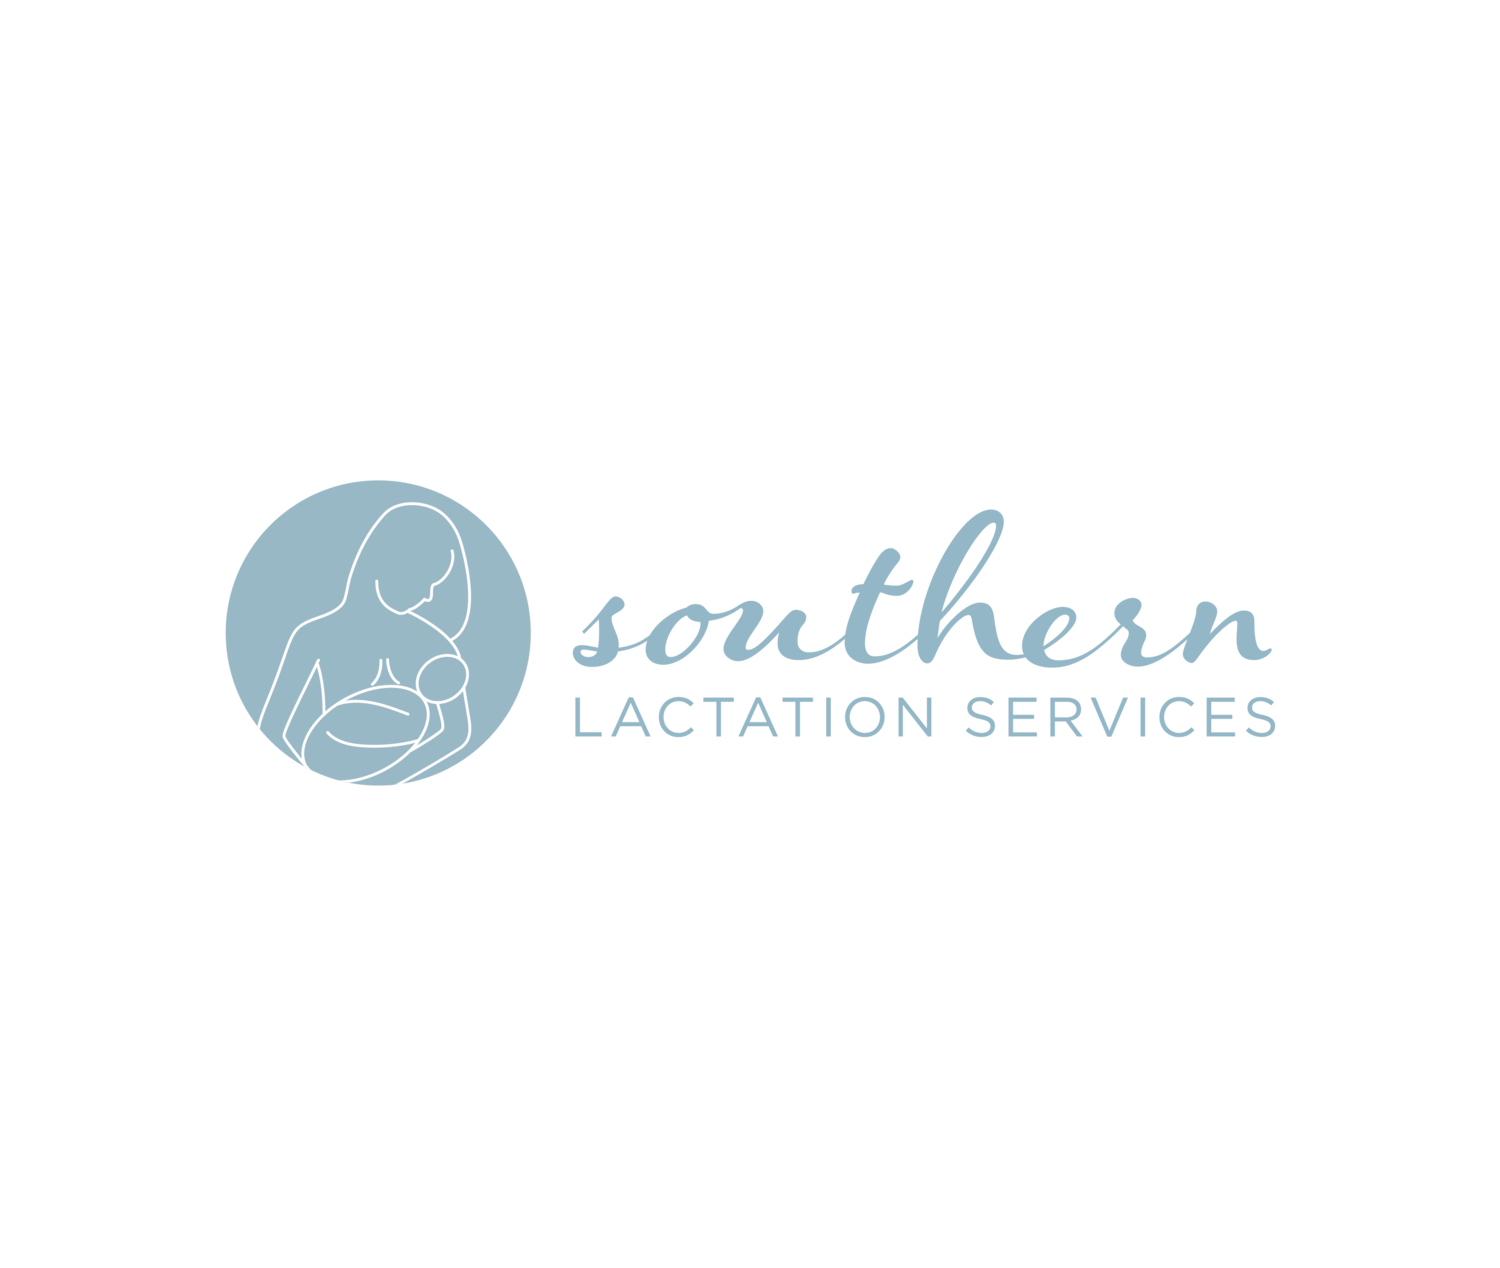 Southern Lactation Services, LLC.